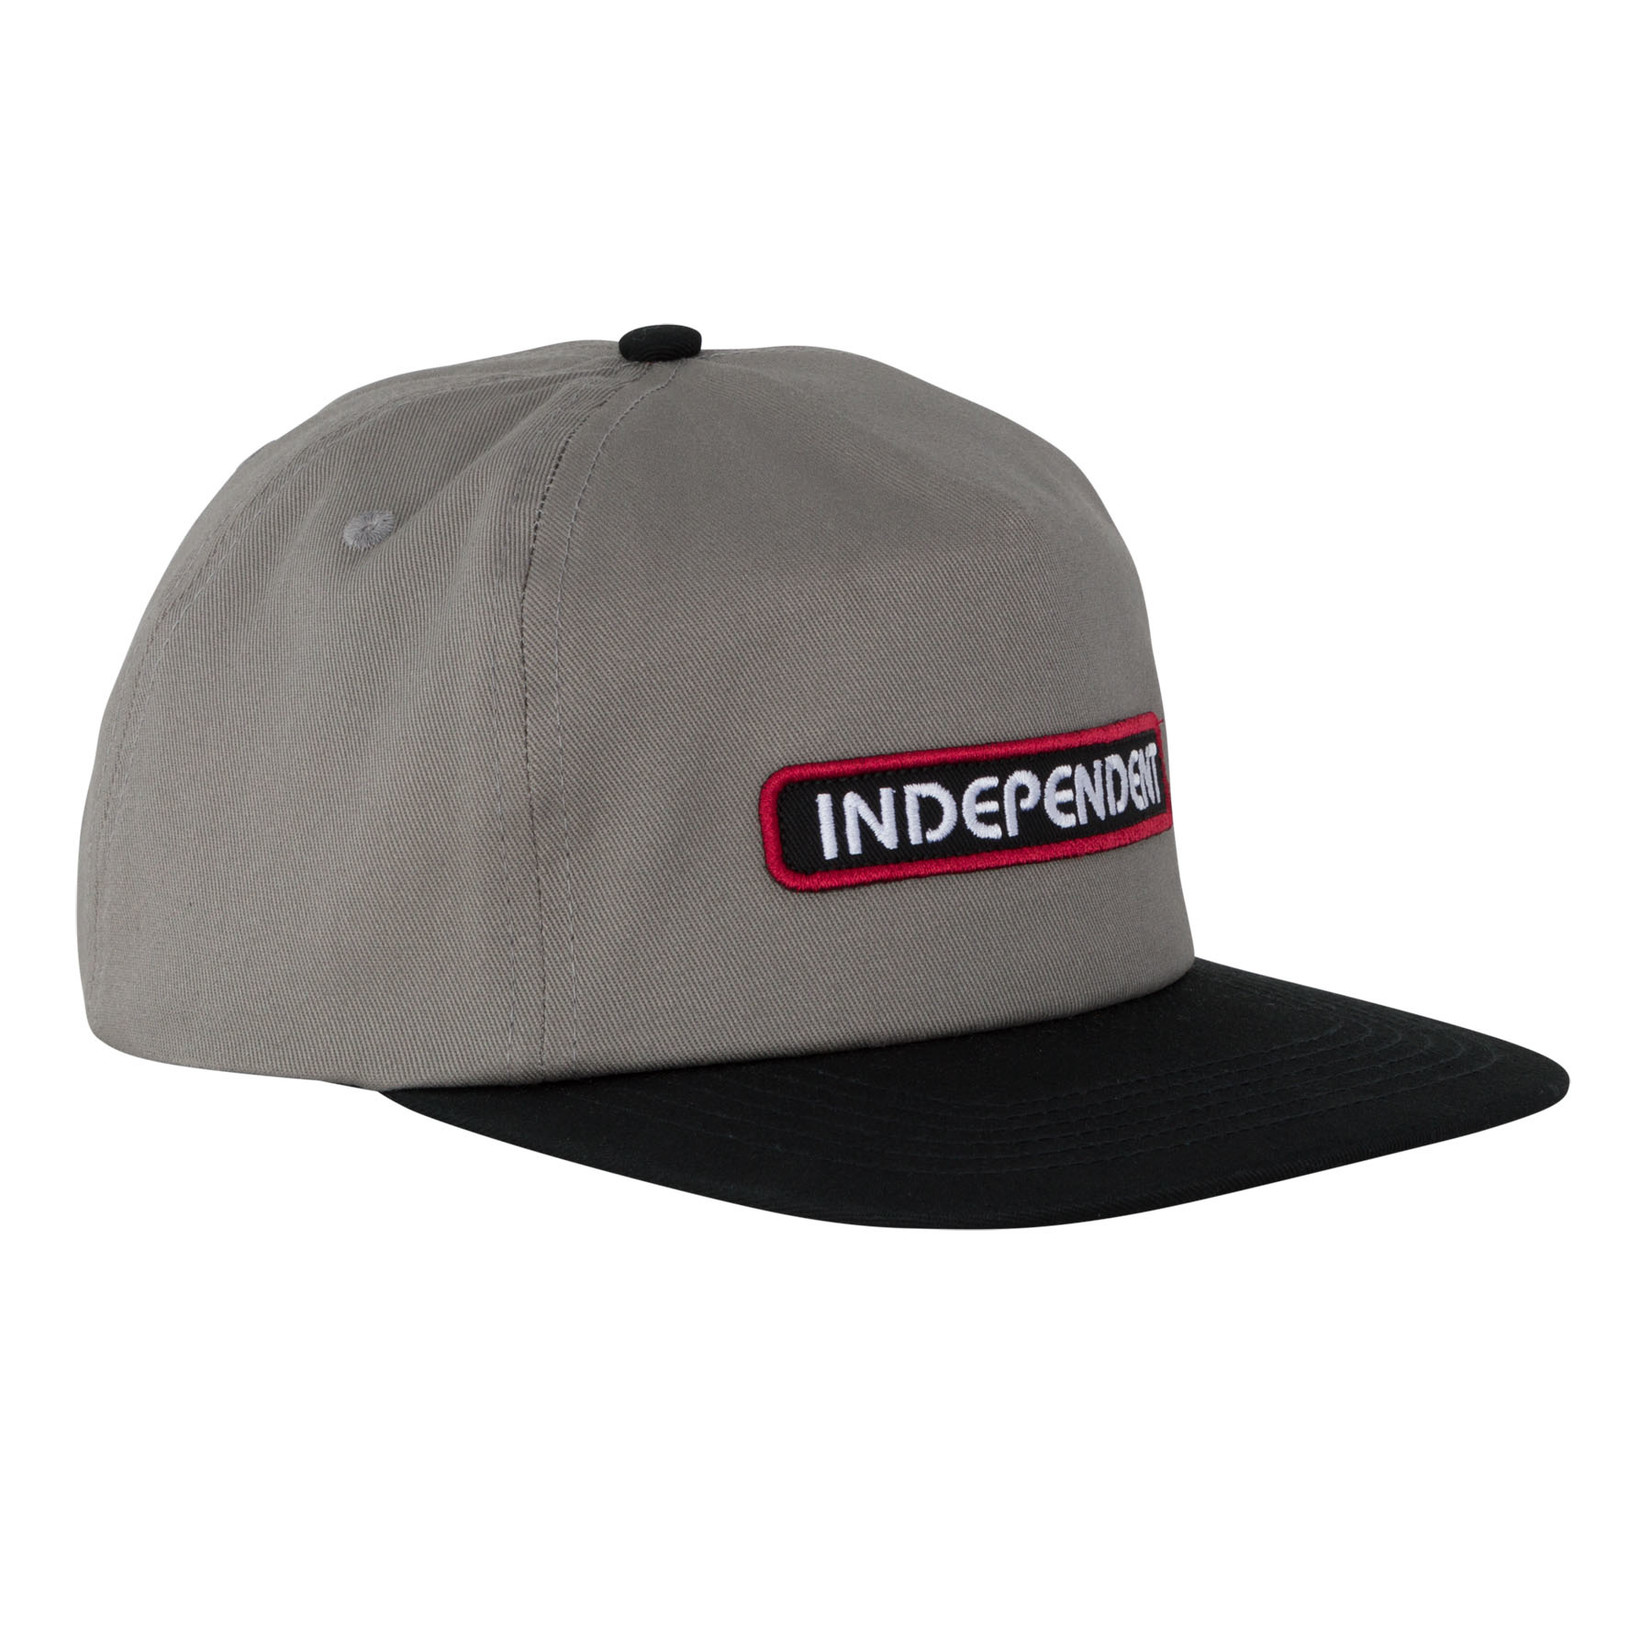 Independent Independent B/C Groundwork Snapback - Grey/Black